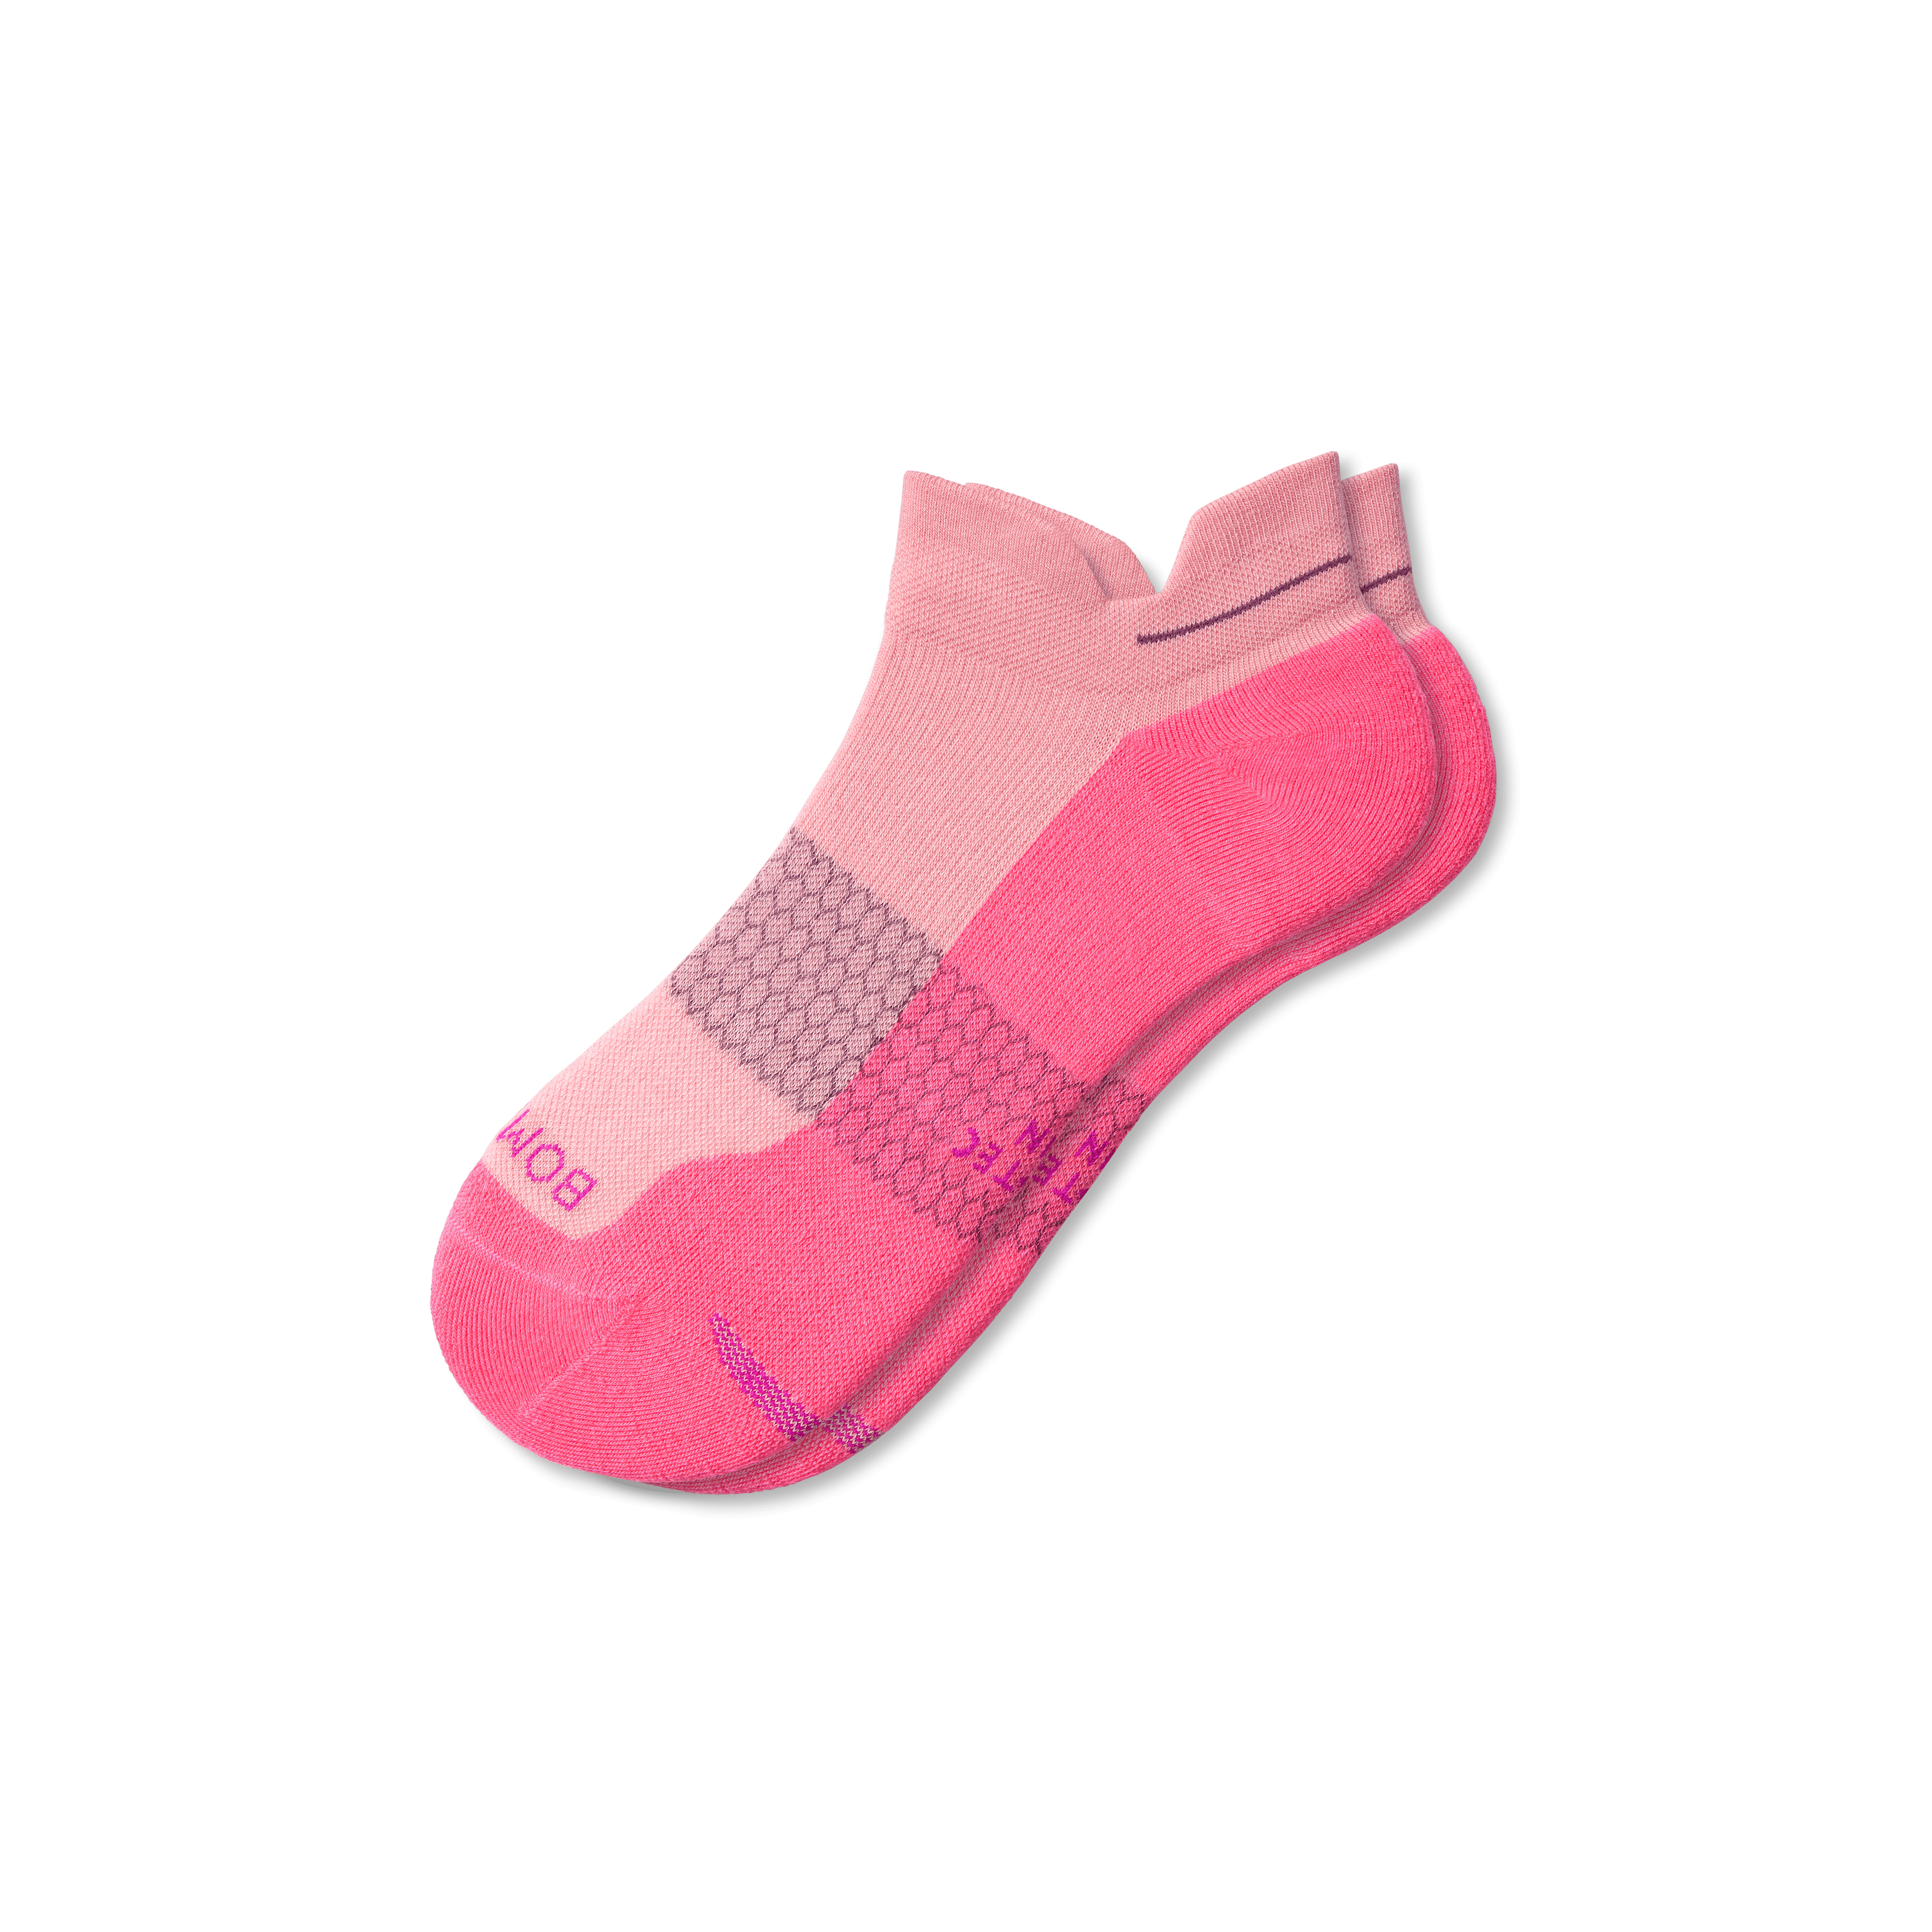 Bombas Running Ankle Socks In Pink Lotus